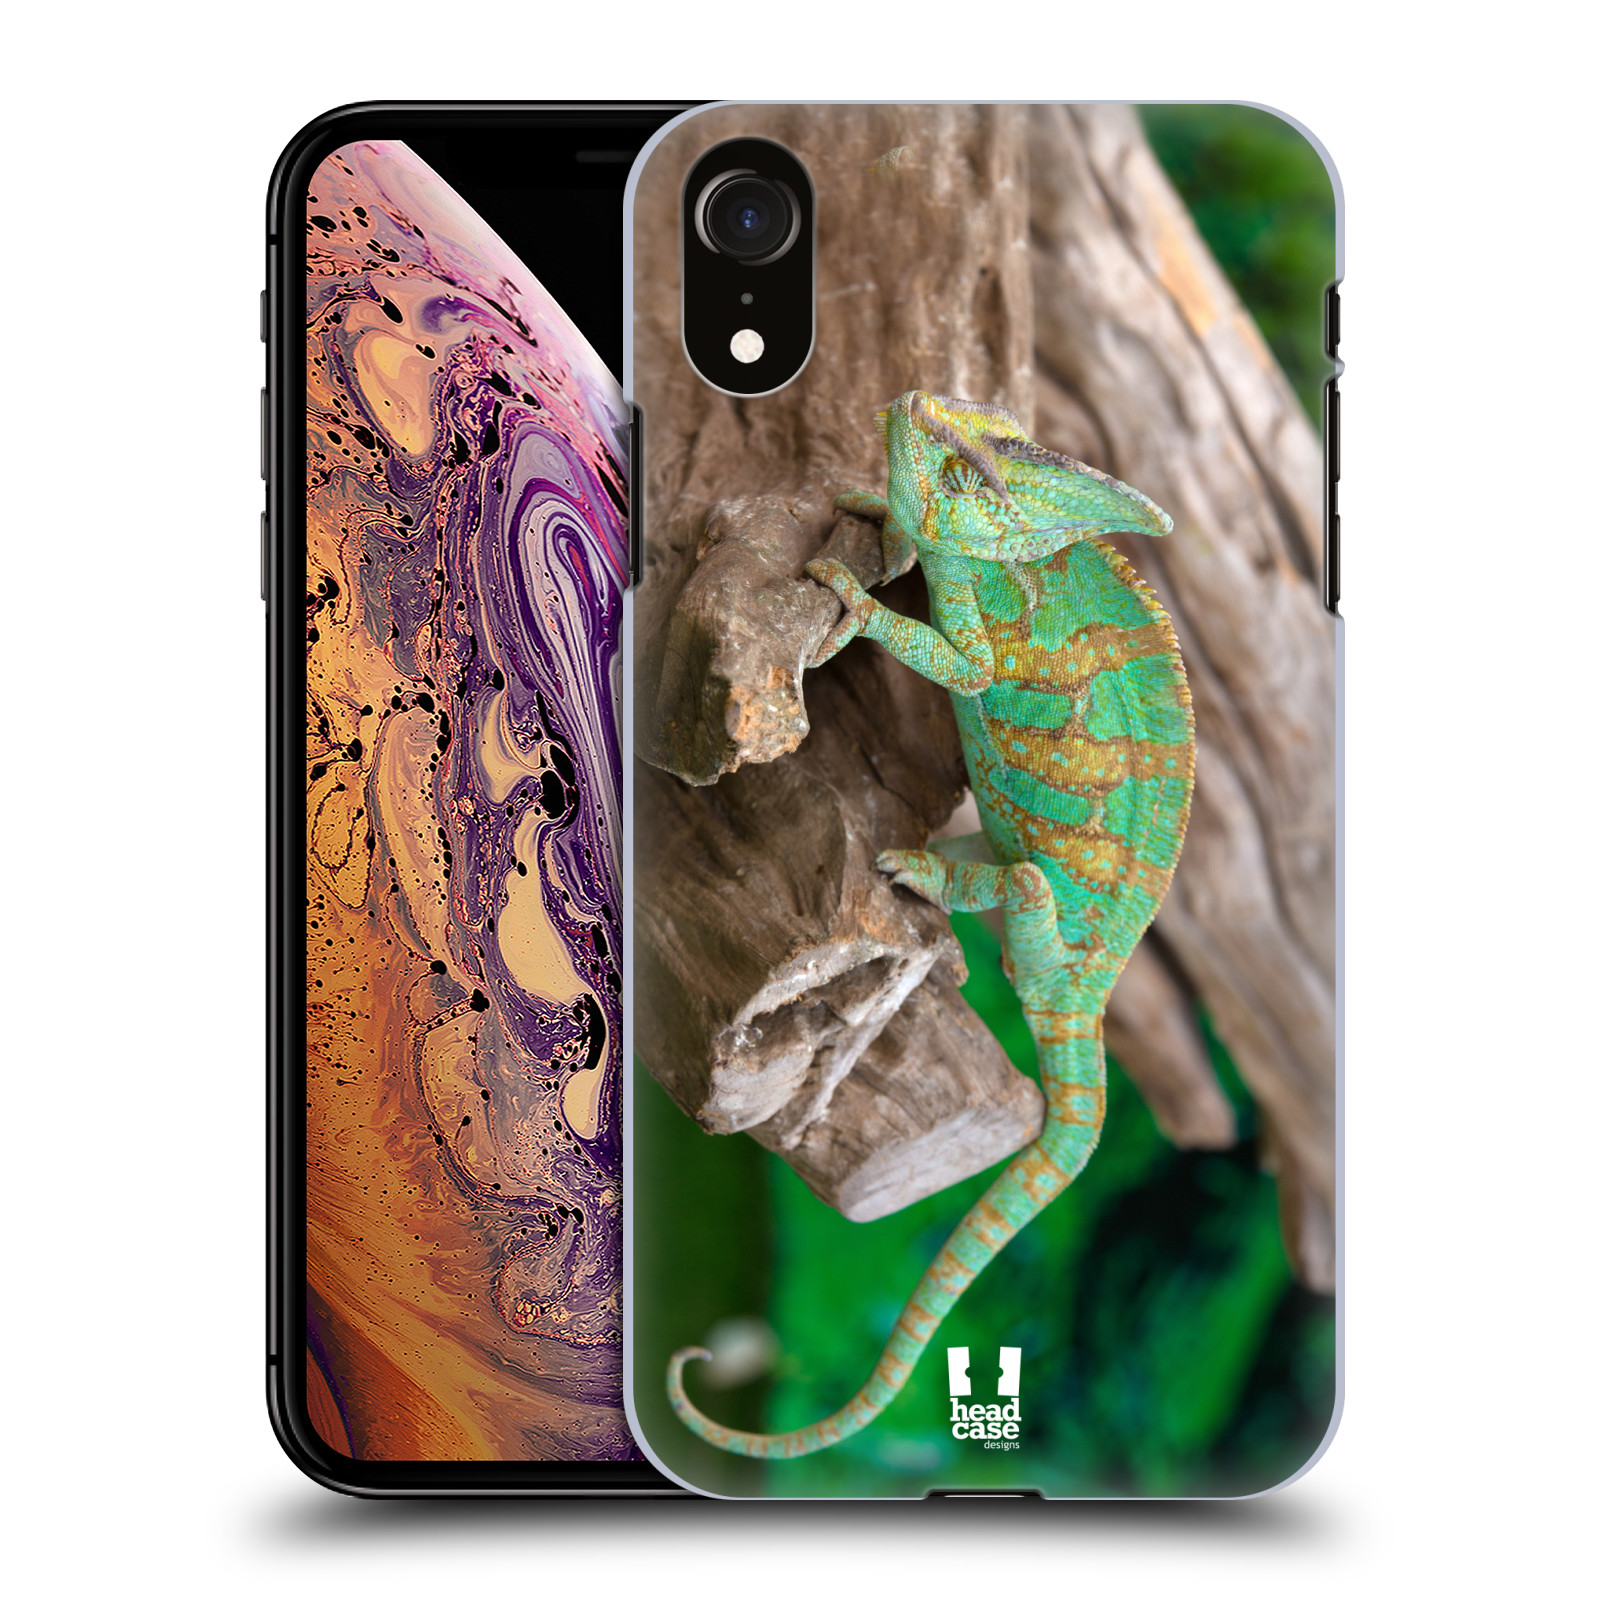 HEAD CASE plastový obal na mobil Apple Iphone XR vzor slavná zvířata foto chameleon